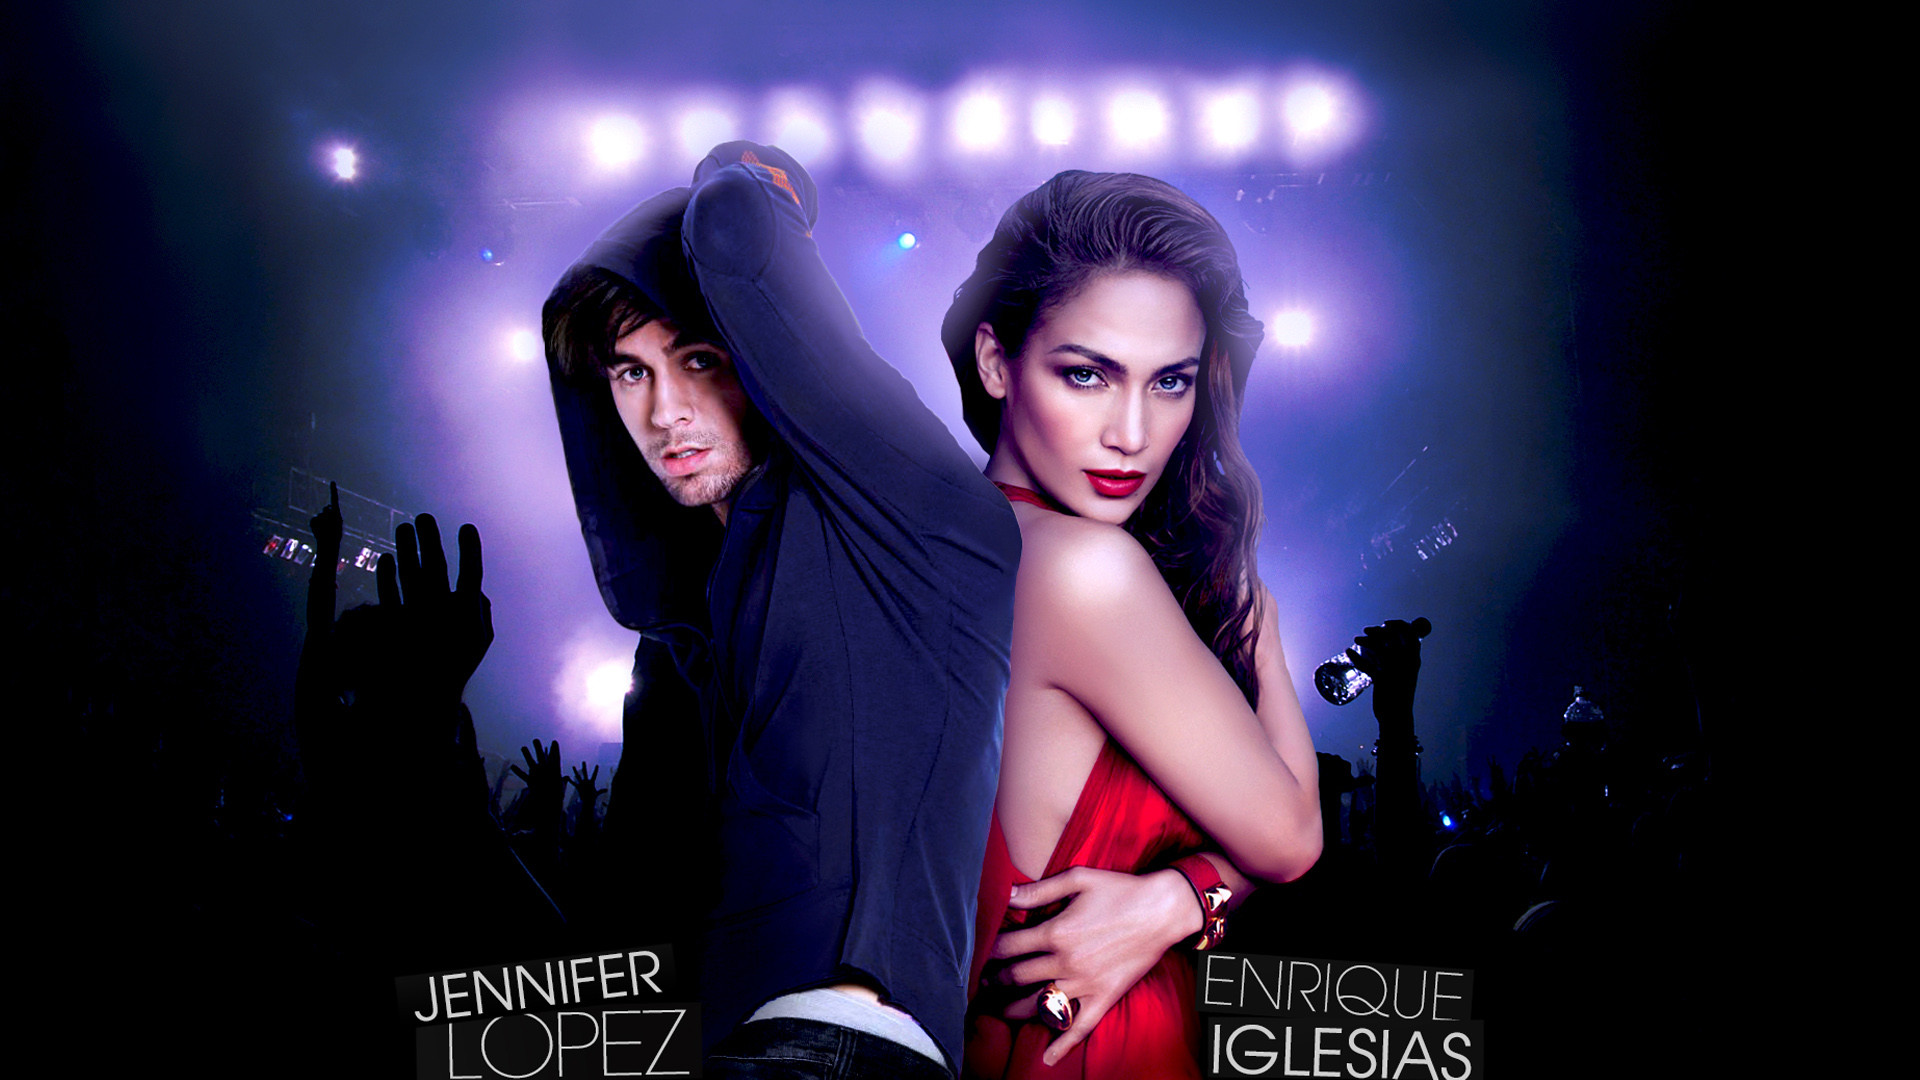 1920x1080 Jennifer Lopez Enrique Iglesias Tour